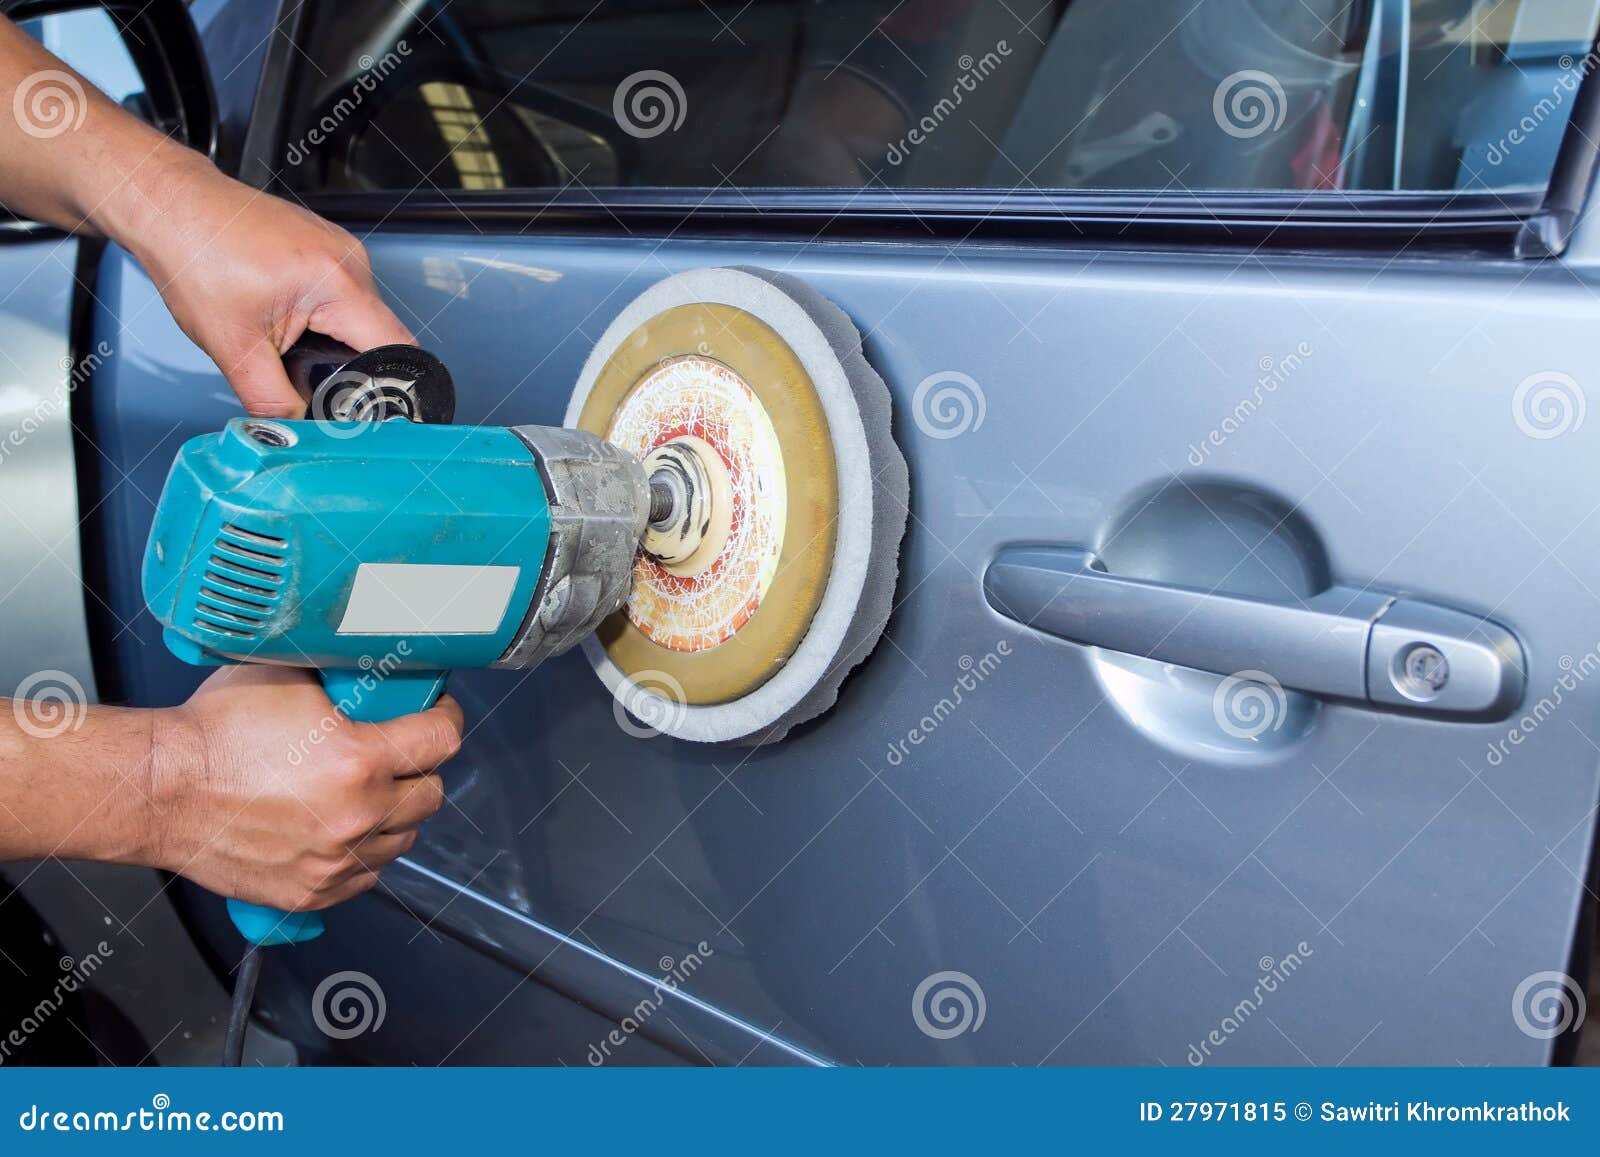 polishing the car with power buffer machine